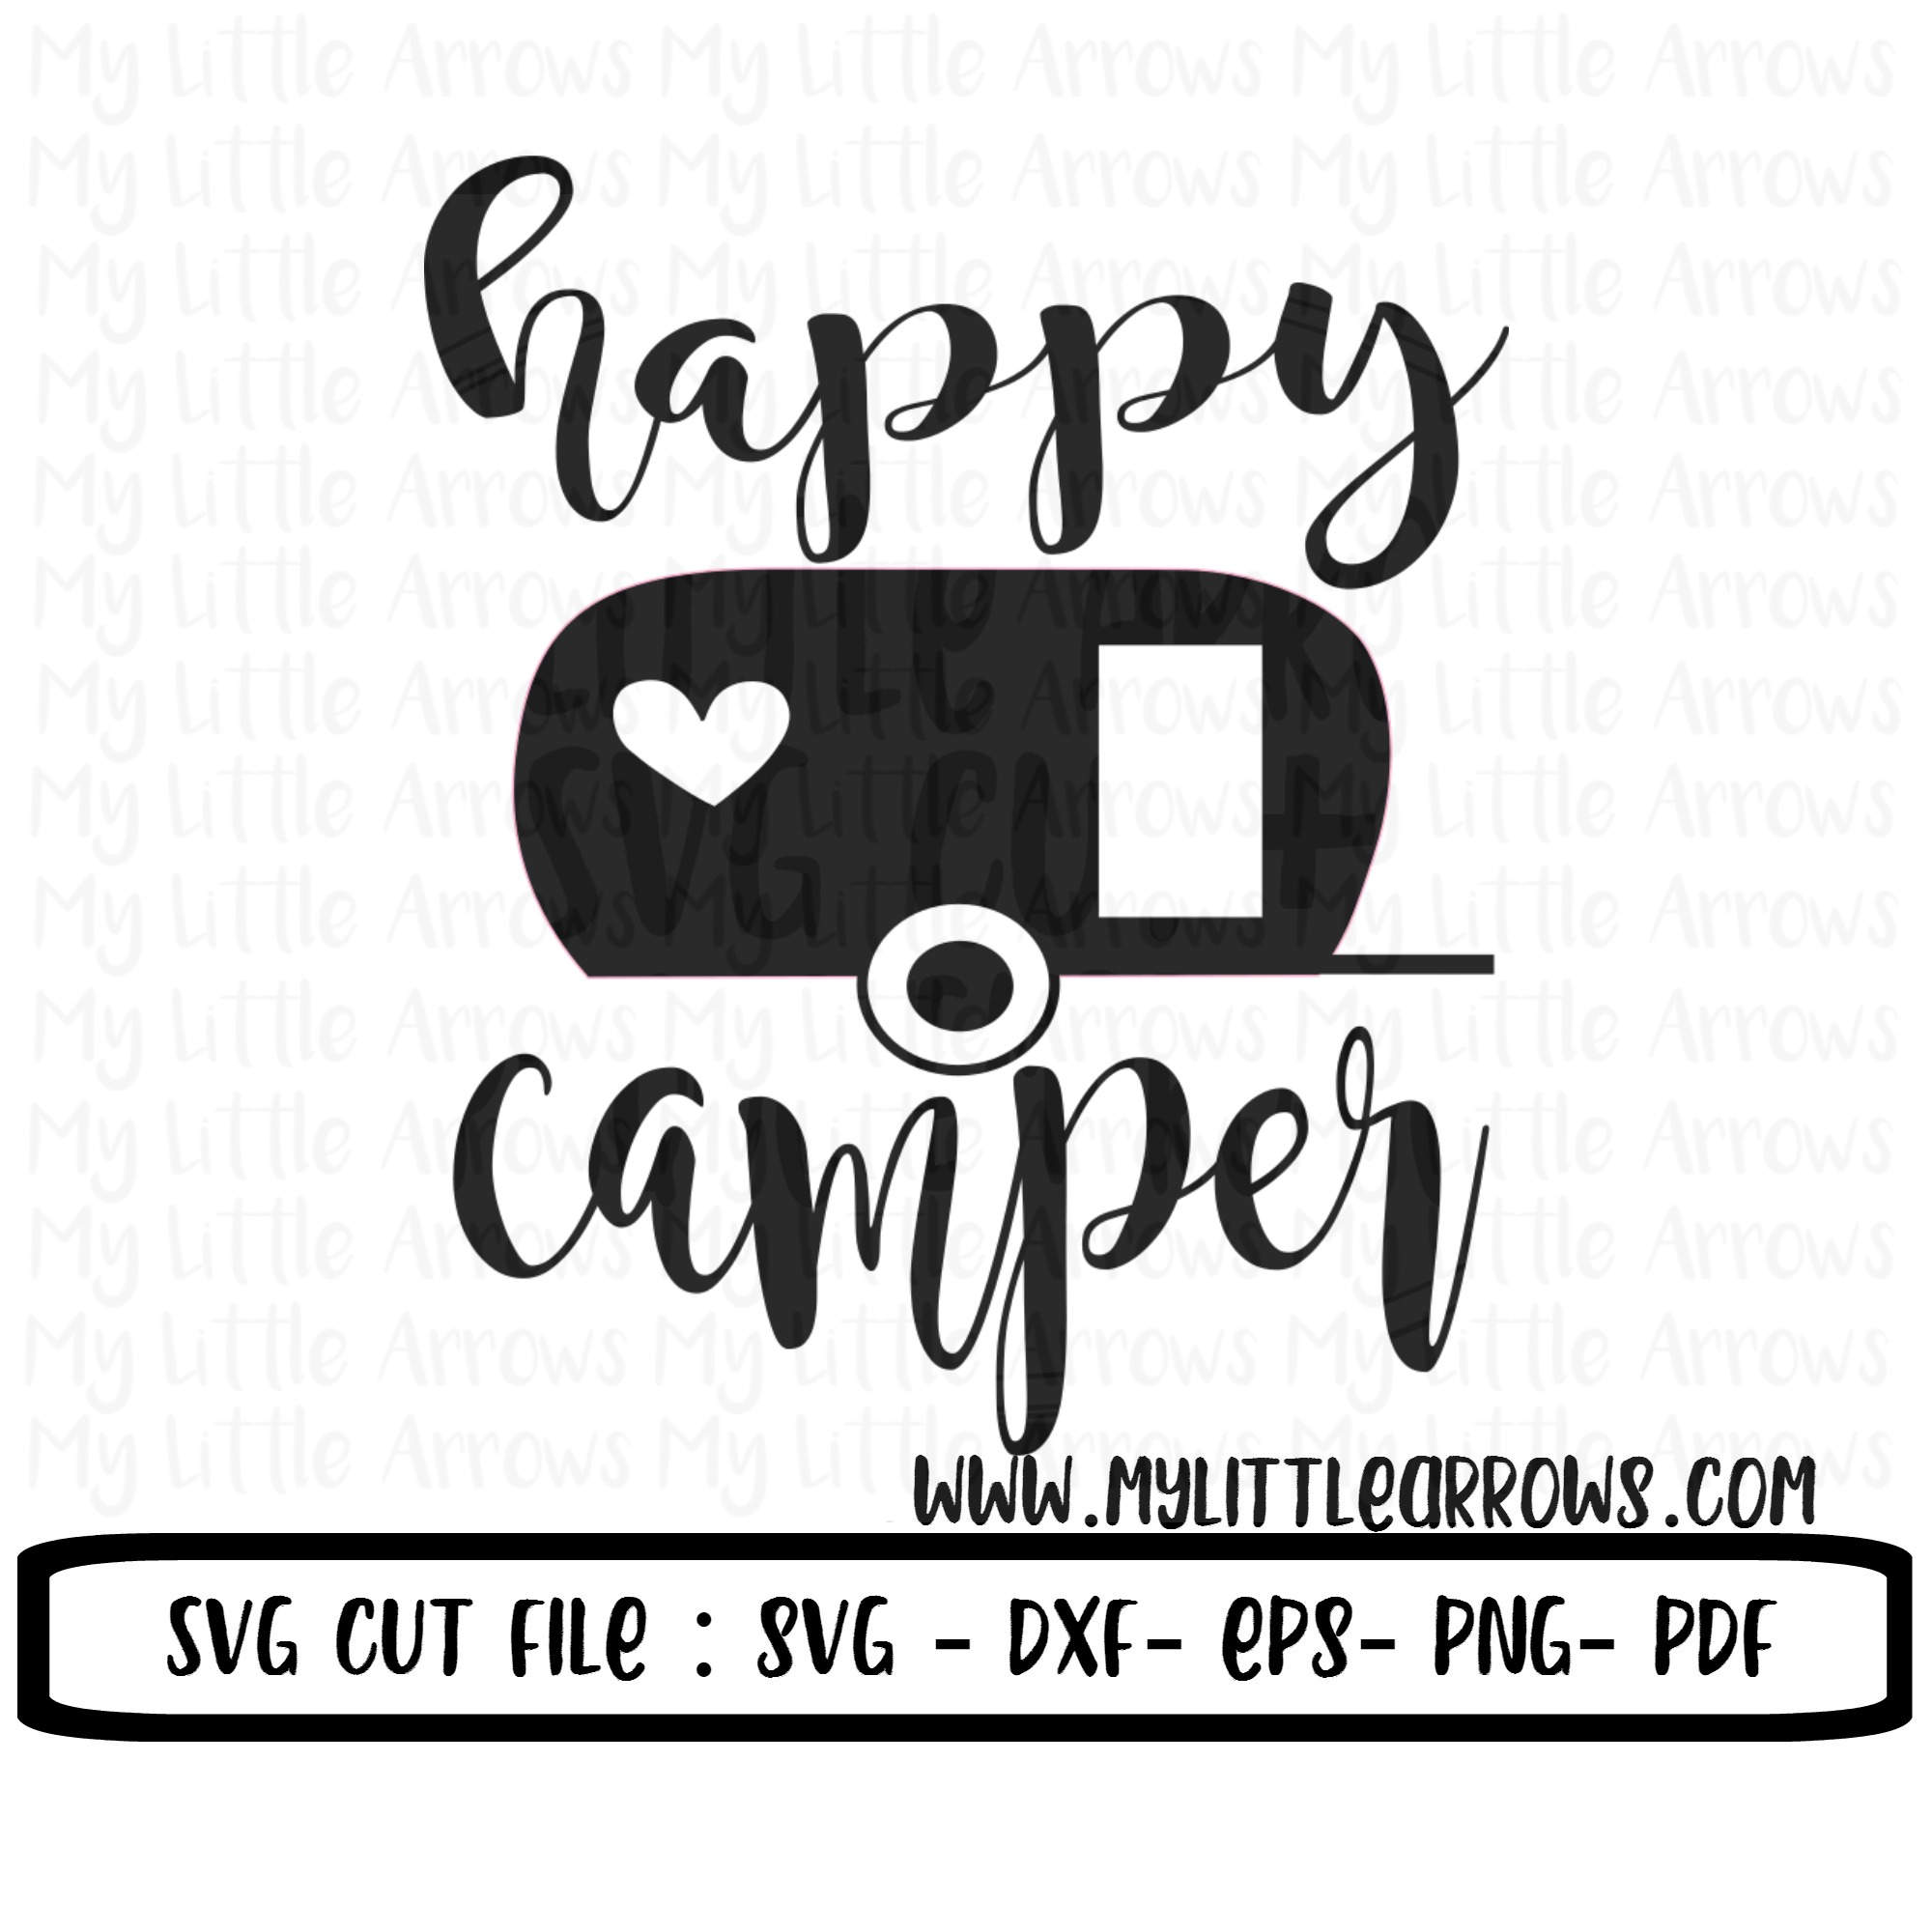 Happy Camper svg, eps, dxf, p